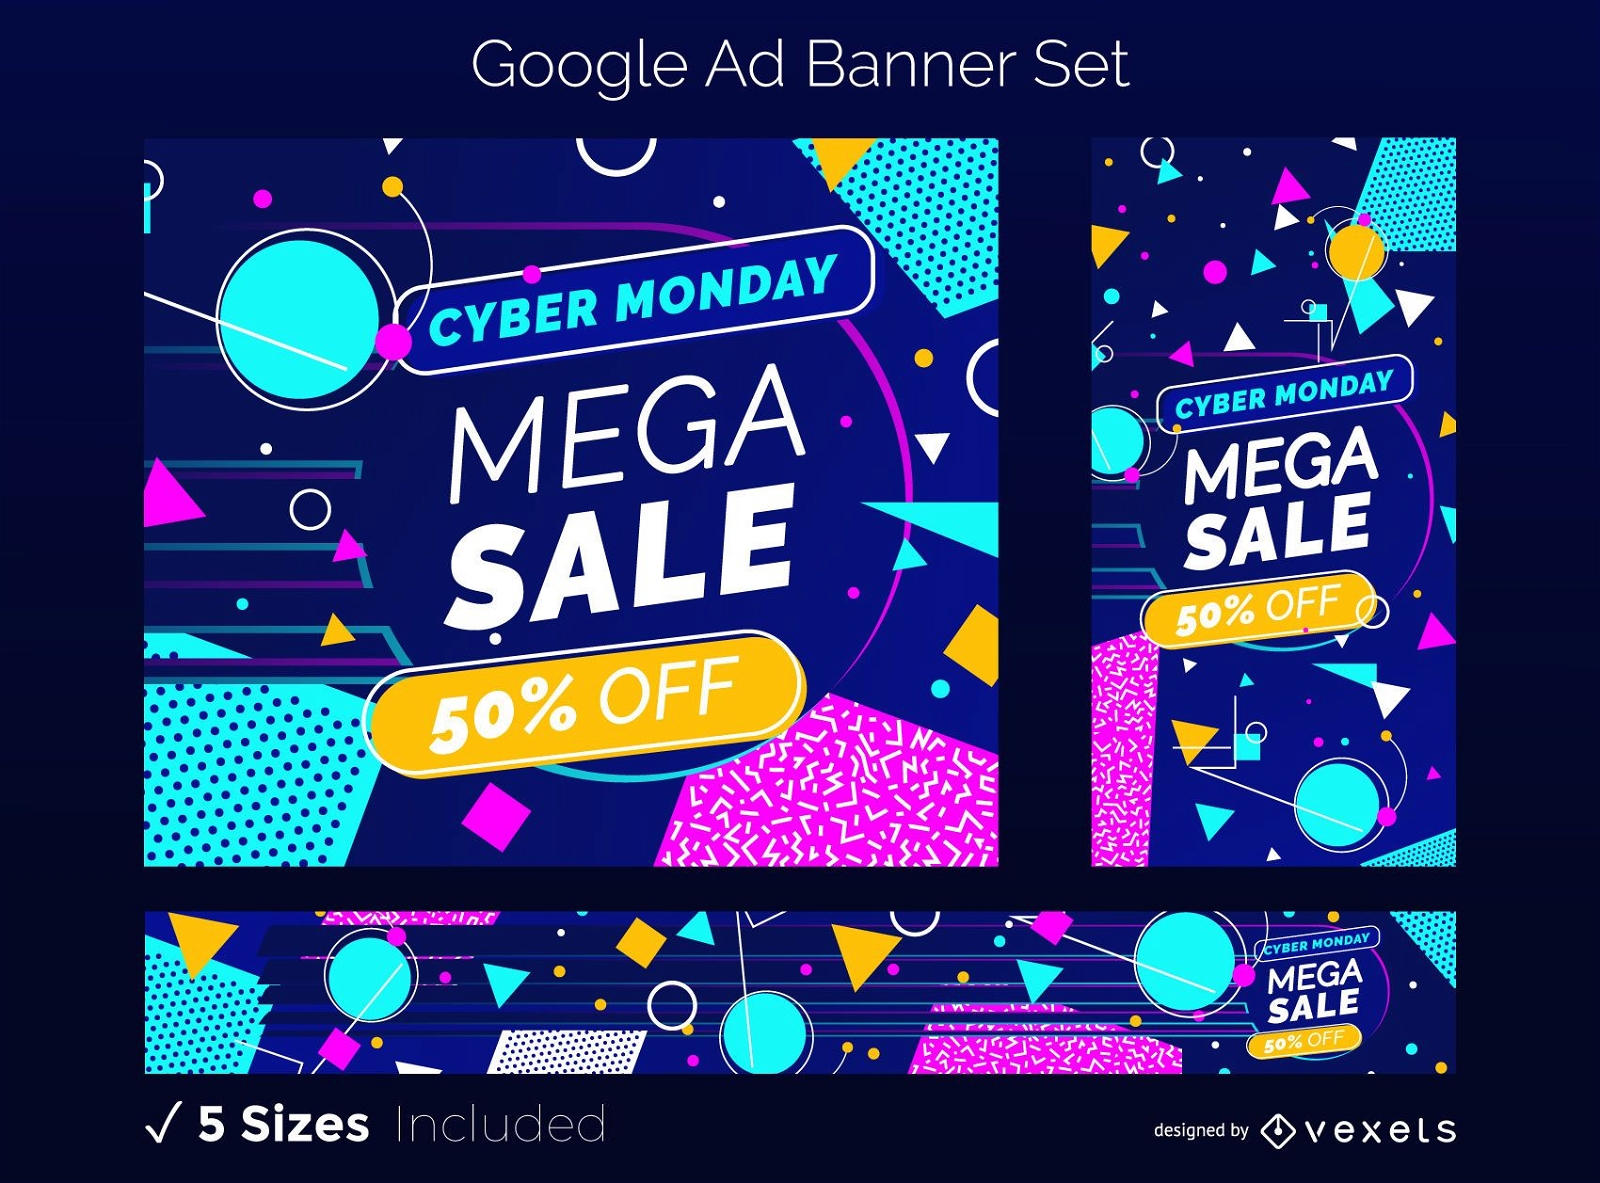 Cyber Monday Sale Google Ad Banner Set